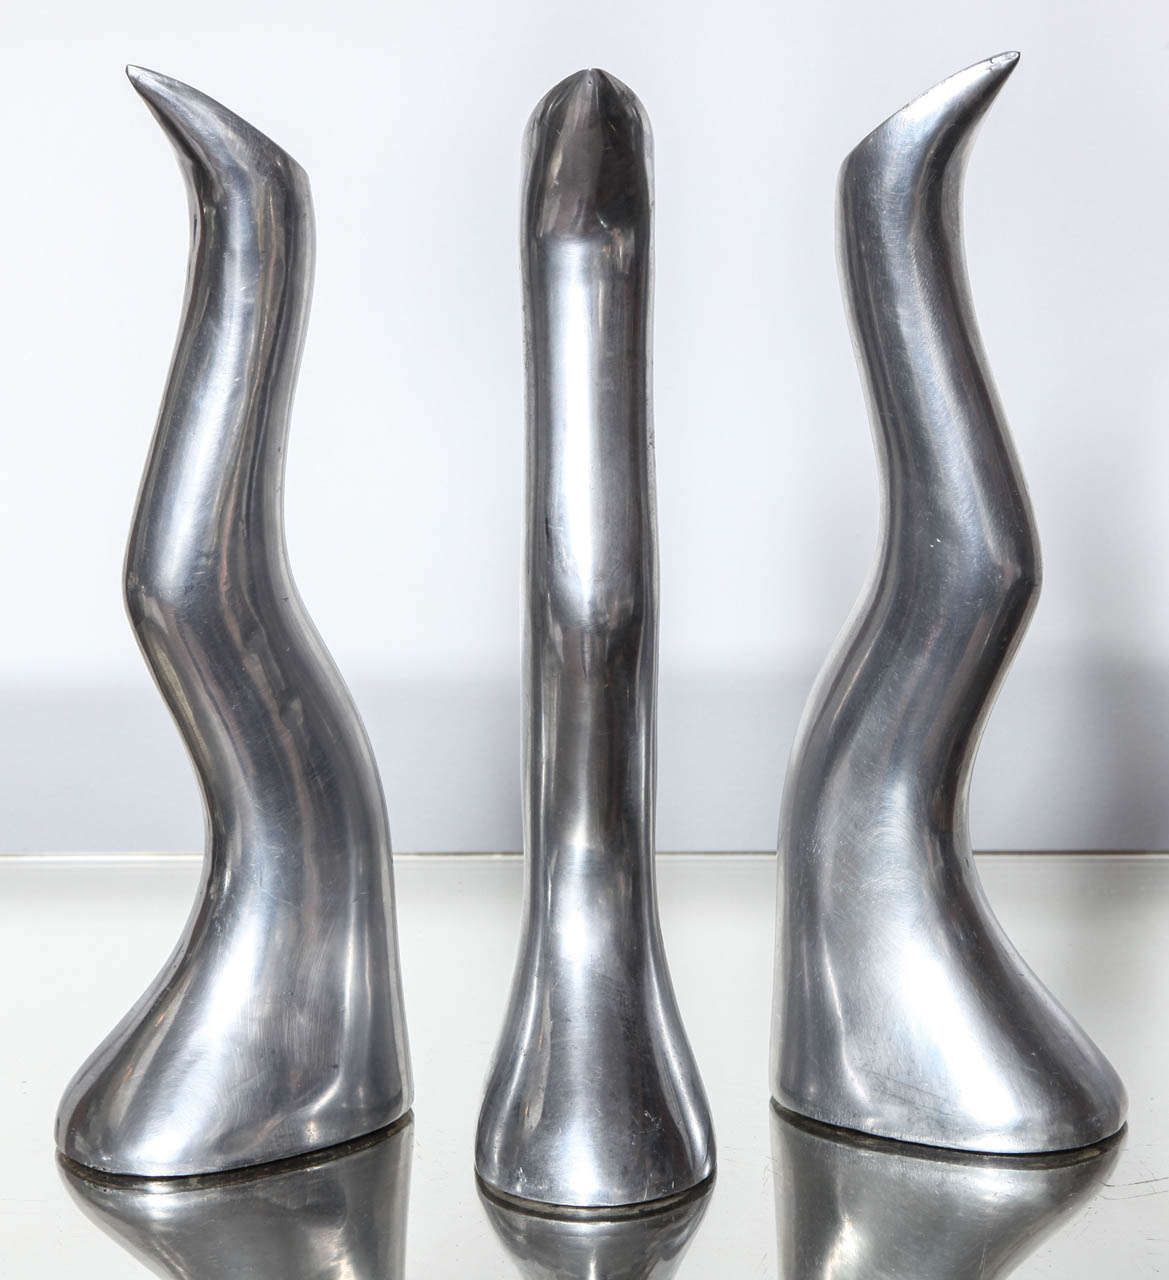 Three great modernist aluminum candlesticks by the Danish designer Anna Everlund